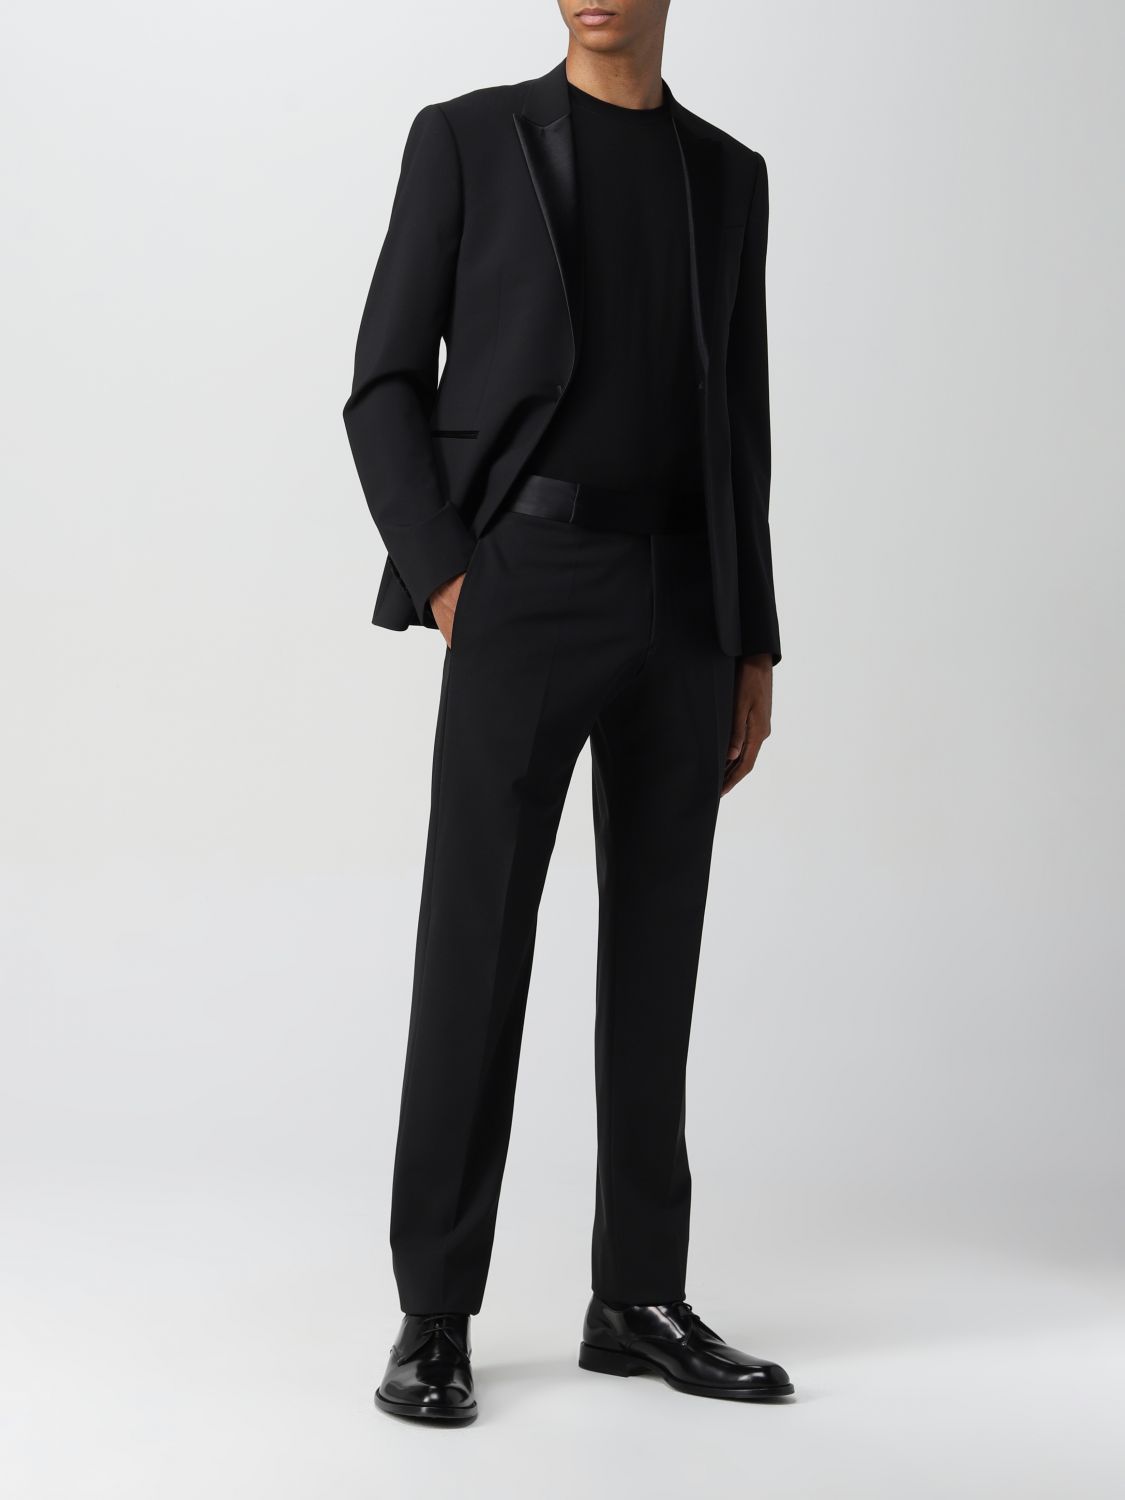 Introducir 83+ imagen emporio armani black suit - Abzlocal.mx